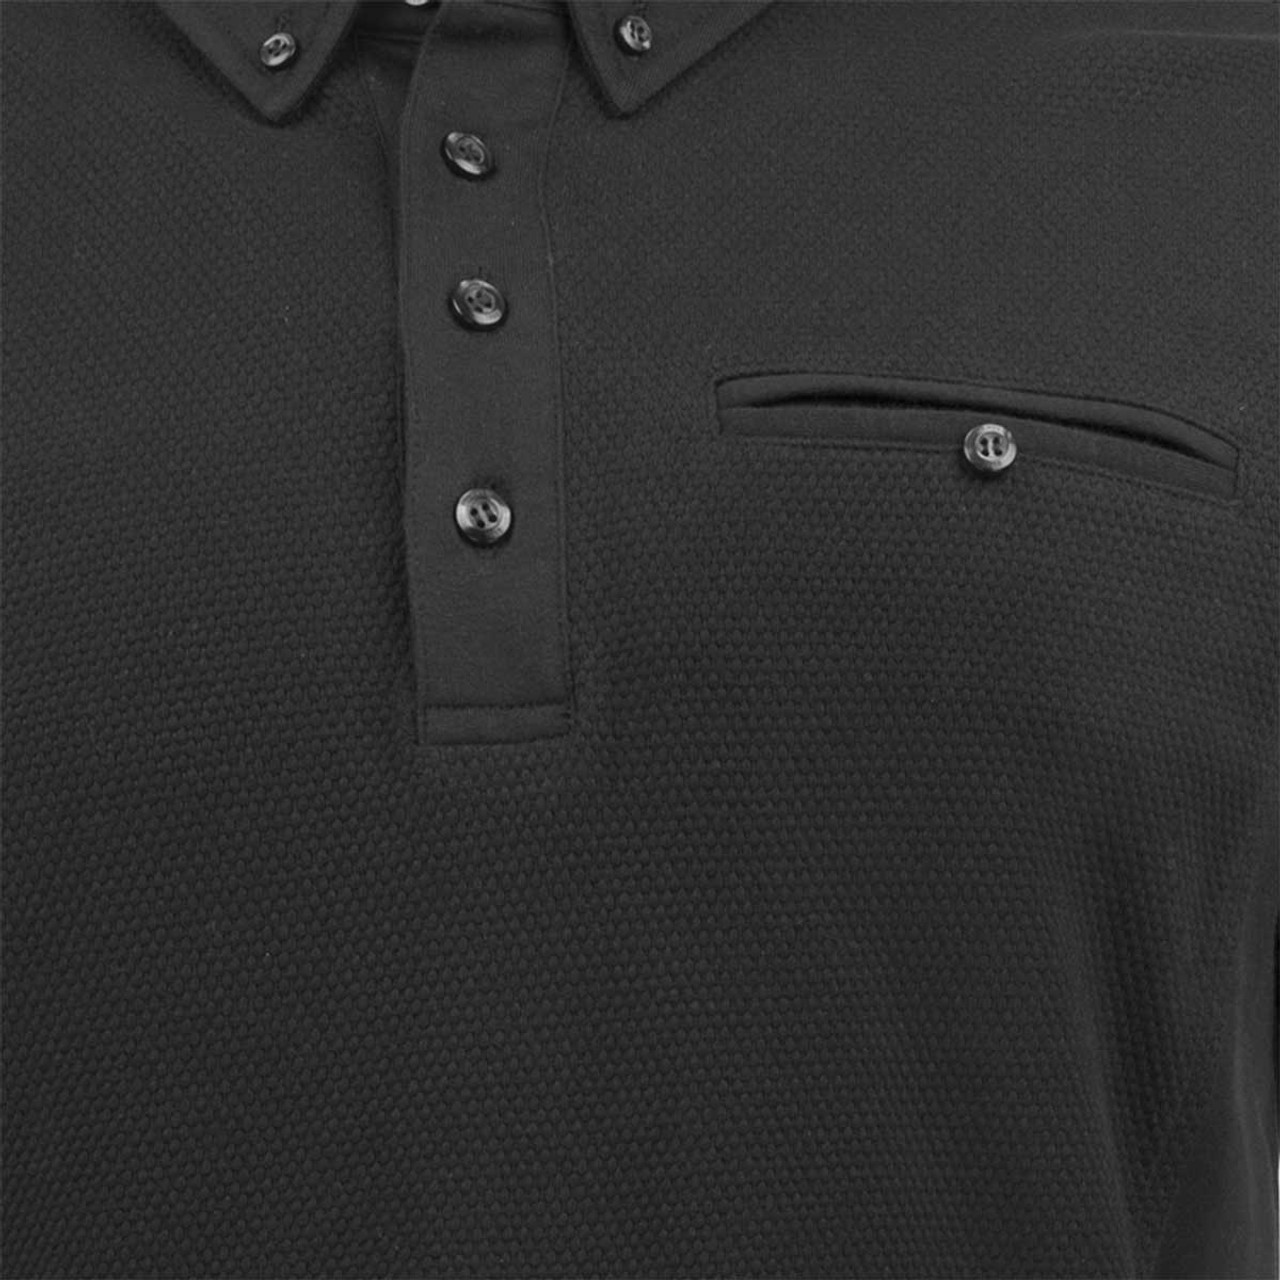 SHELLDEN Ladies Cotton Knit Polo Shirt | James Harvest Clothing Australia